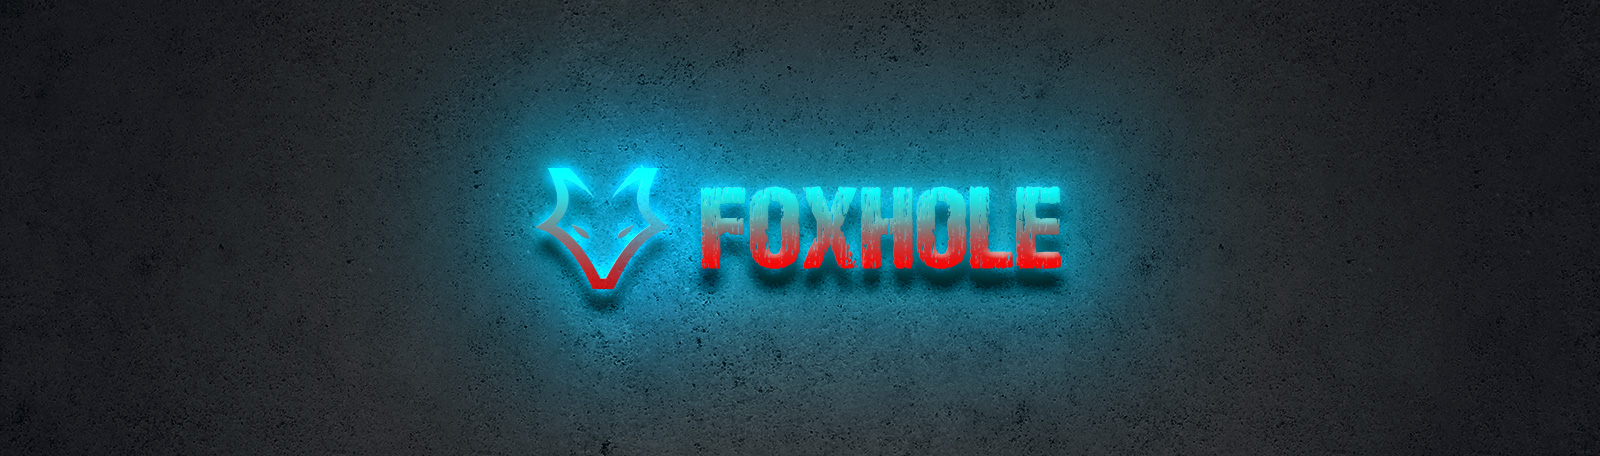 Foxhole Banner Rise Attire Signature Series